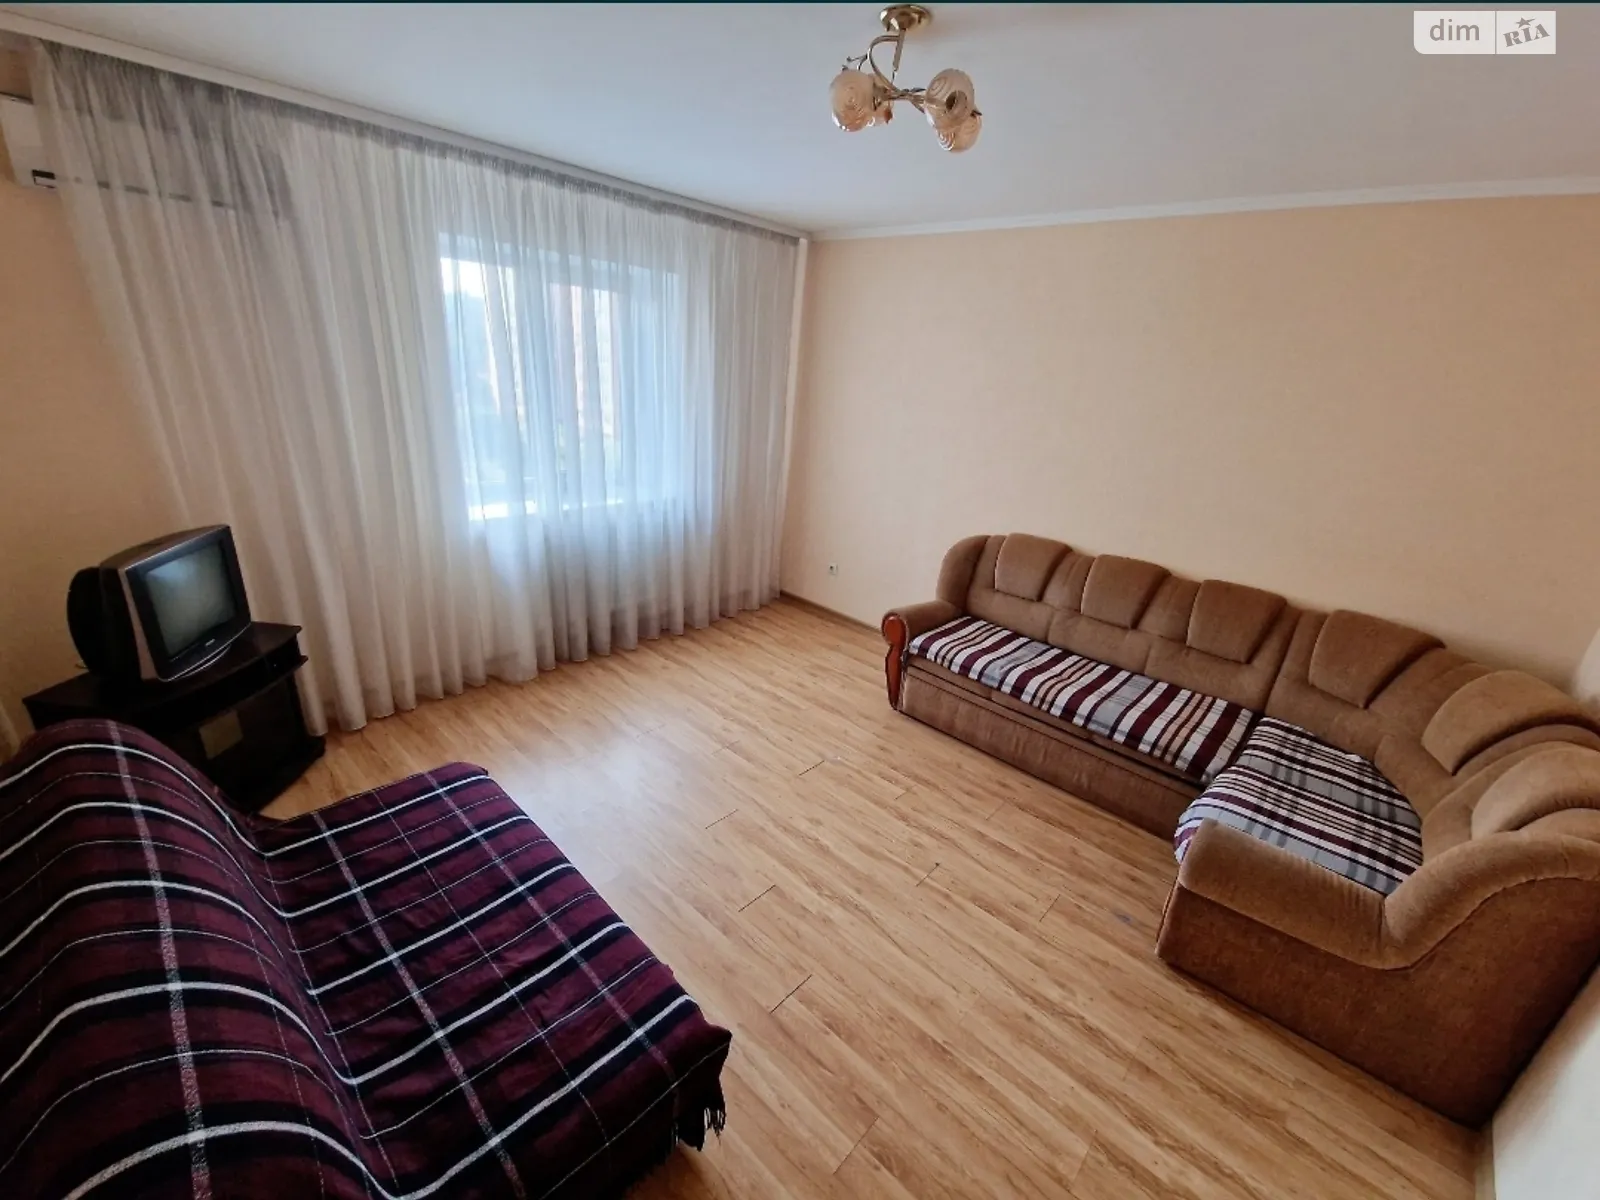 1-кімнатна квартира у Луцьку, ул. Кравчука, 11Б - фото 3